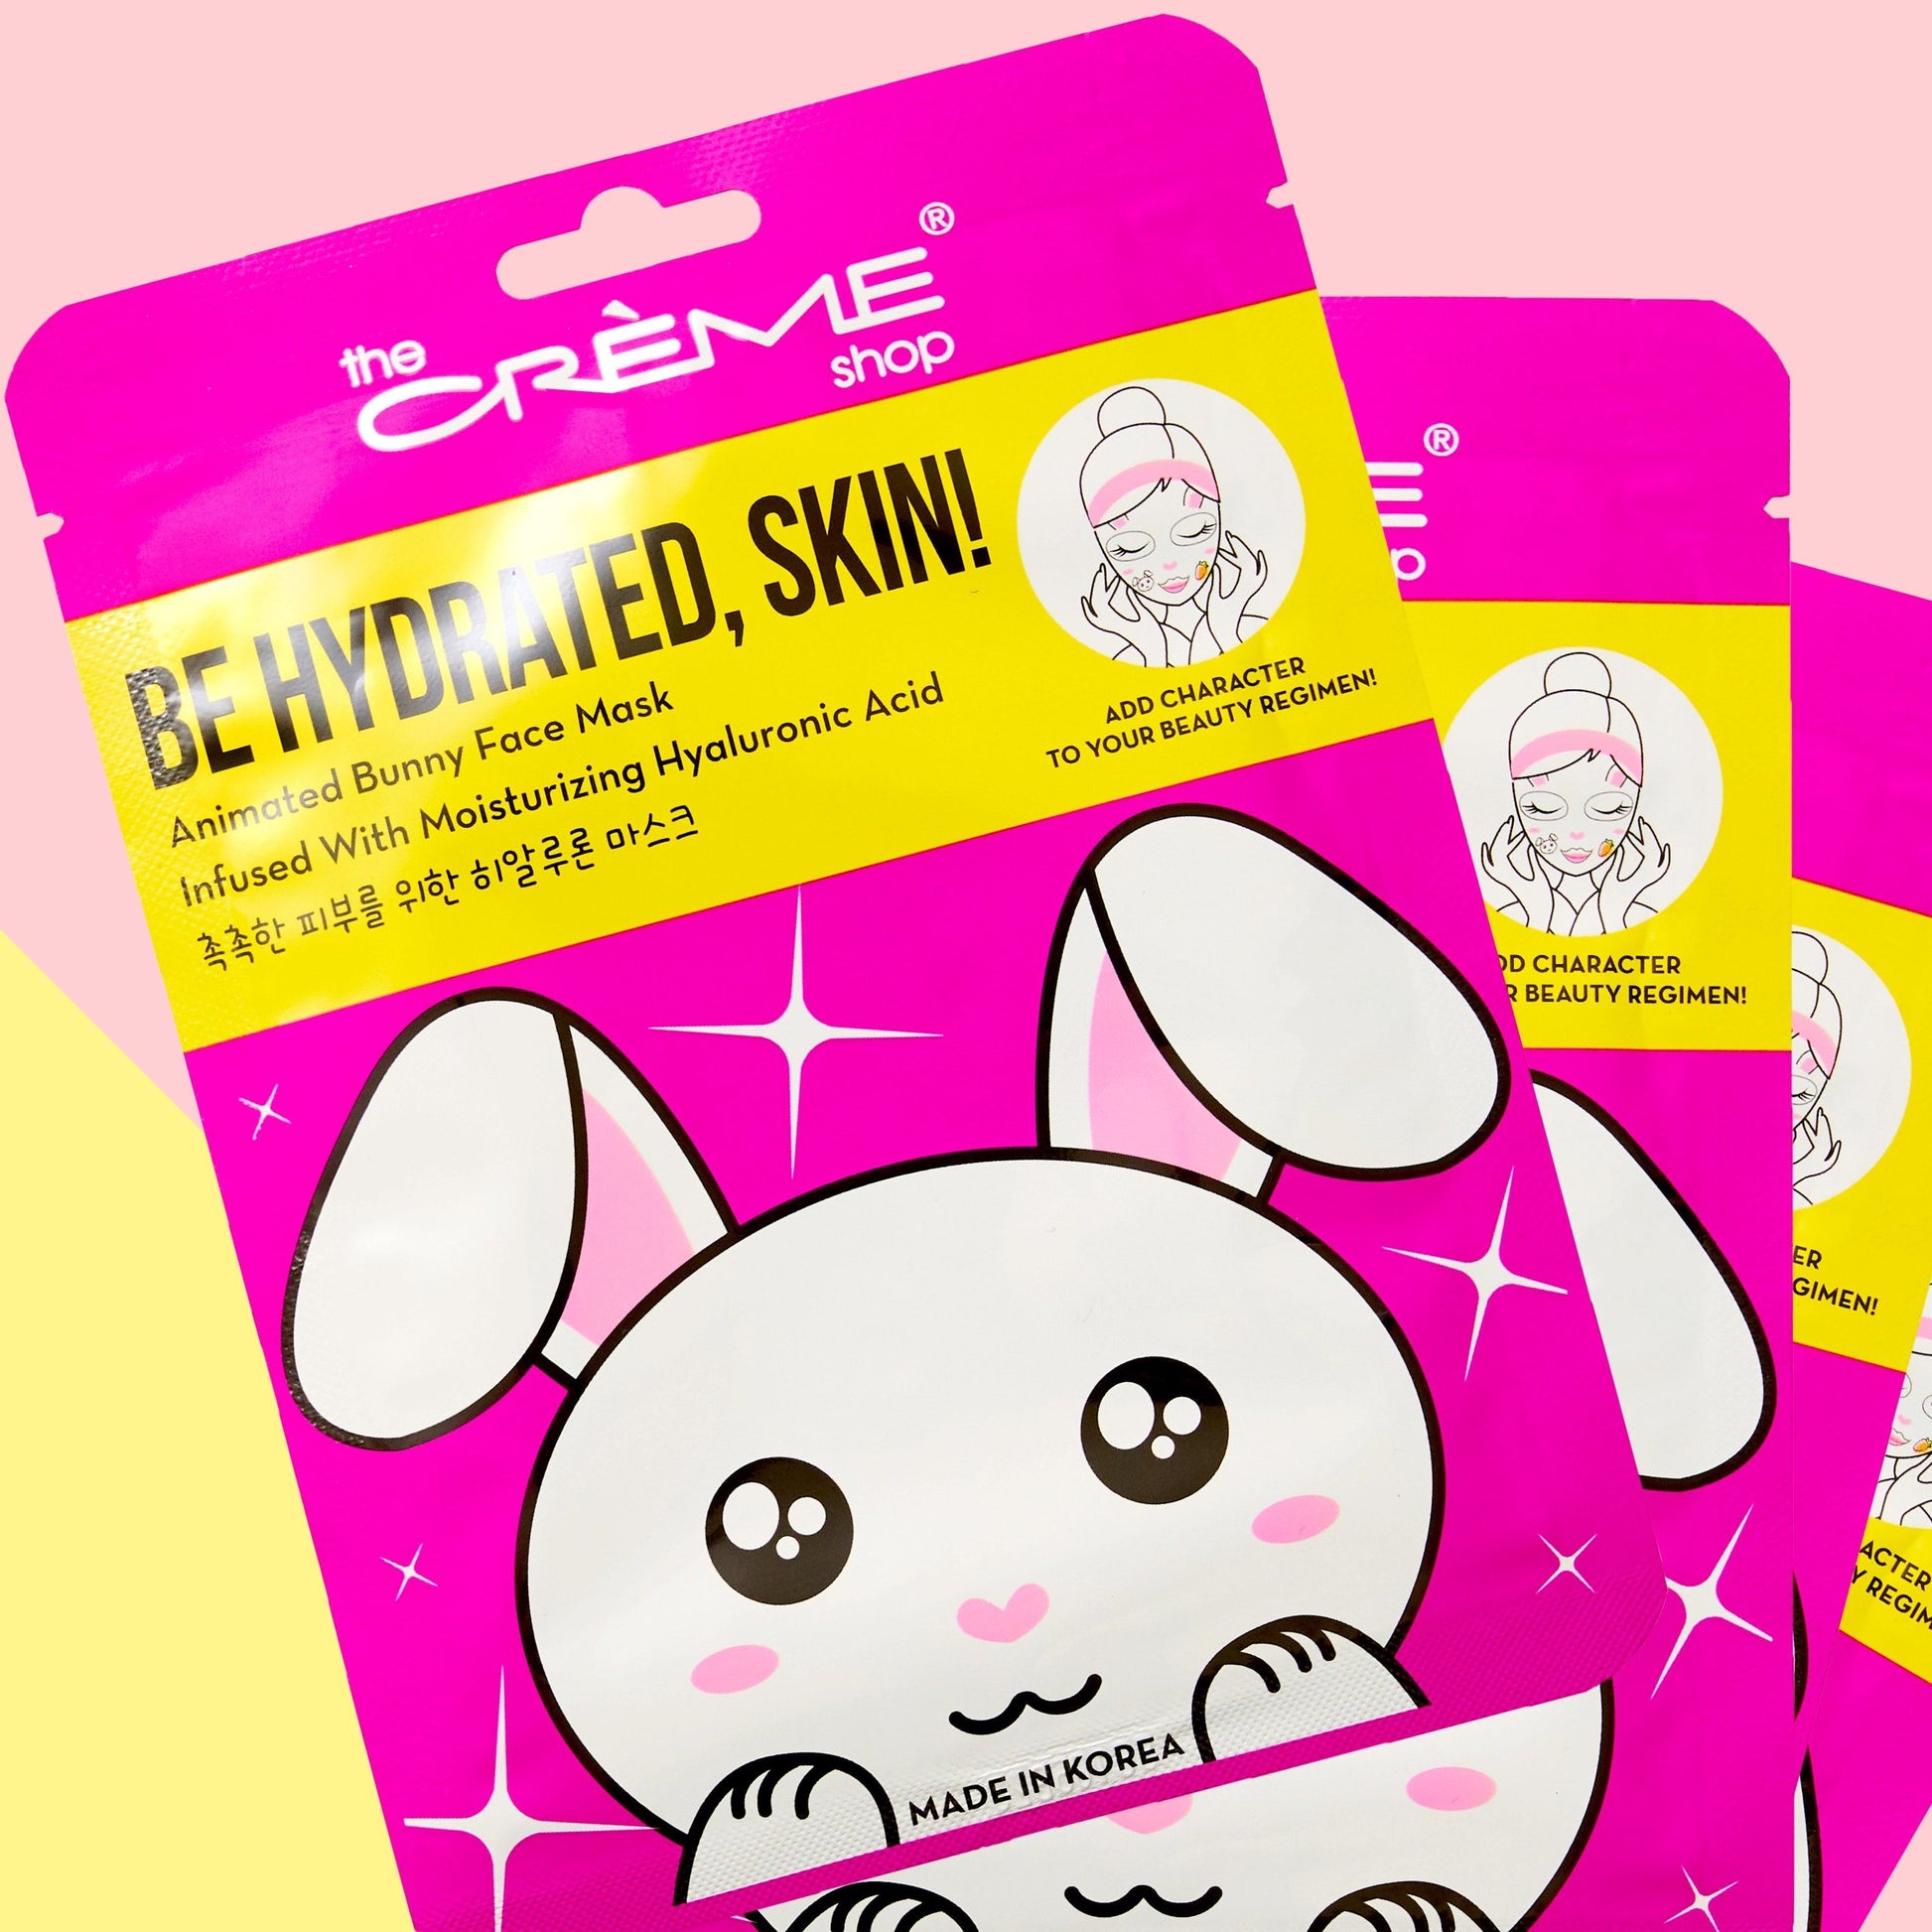 Be Hydrated, Skin! Animated Bunny Face Mask - Moisturizing Hyaluronic Acid Animated Sheet Masks - The Crème Shop 